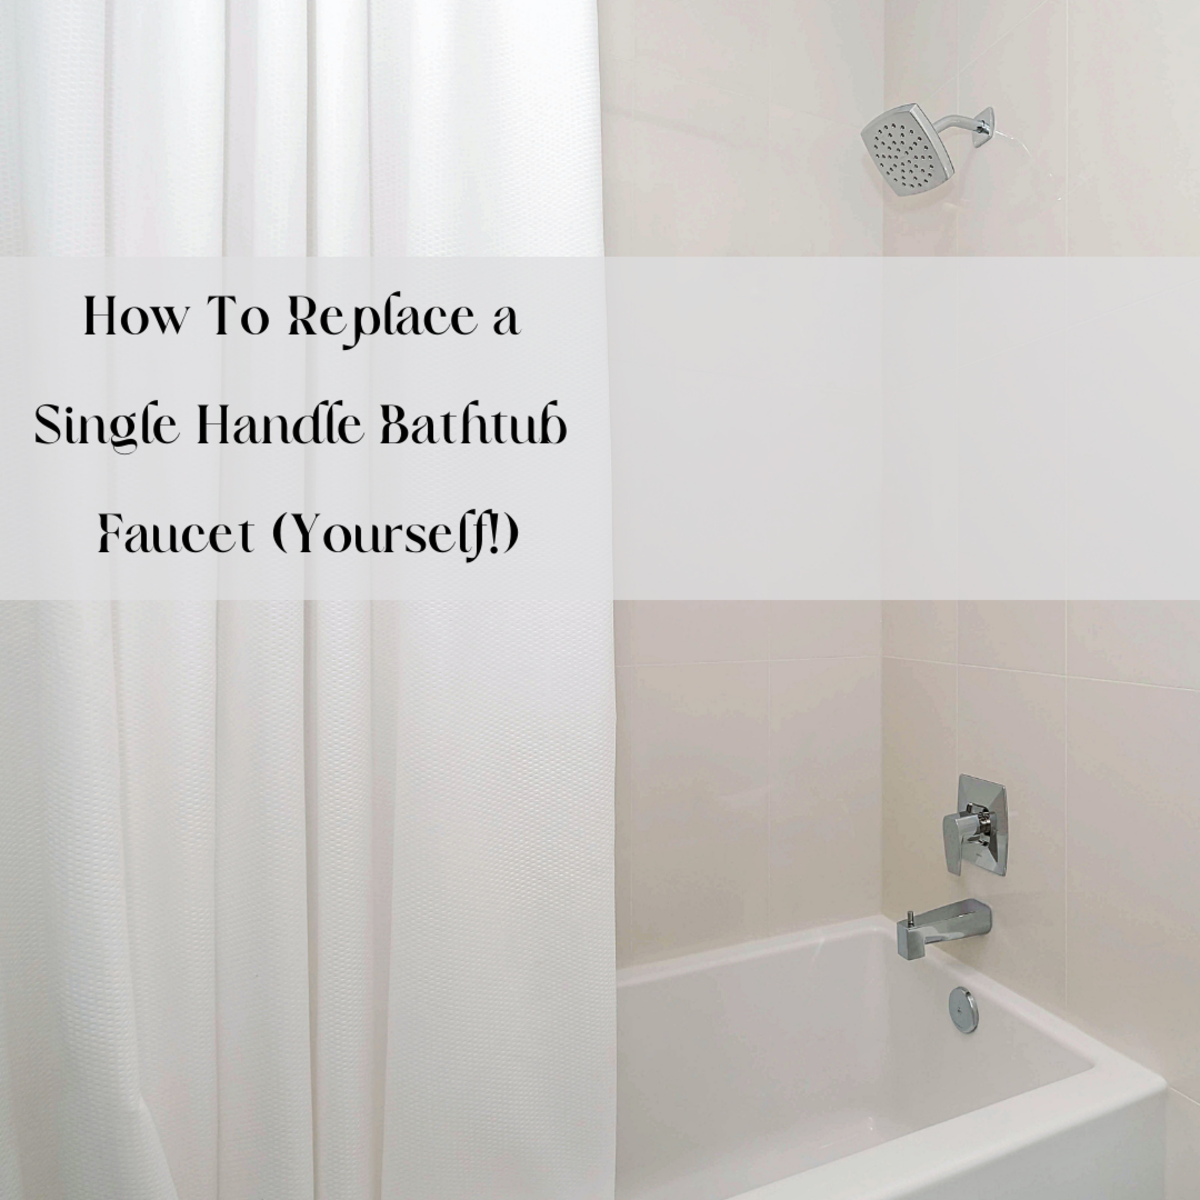 Single Handle Bathtub Faucet Yourself, How To Fix A Leaky Bathtub Faucet Cartridge